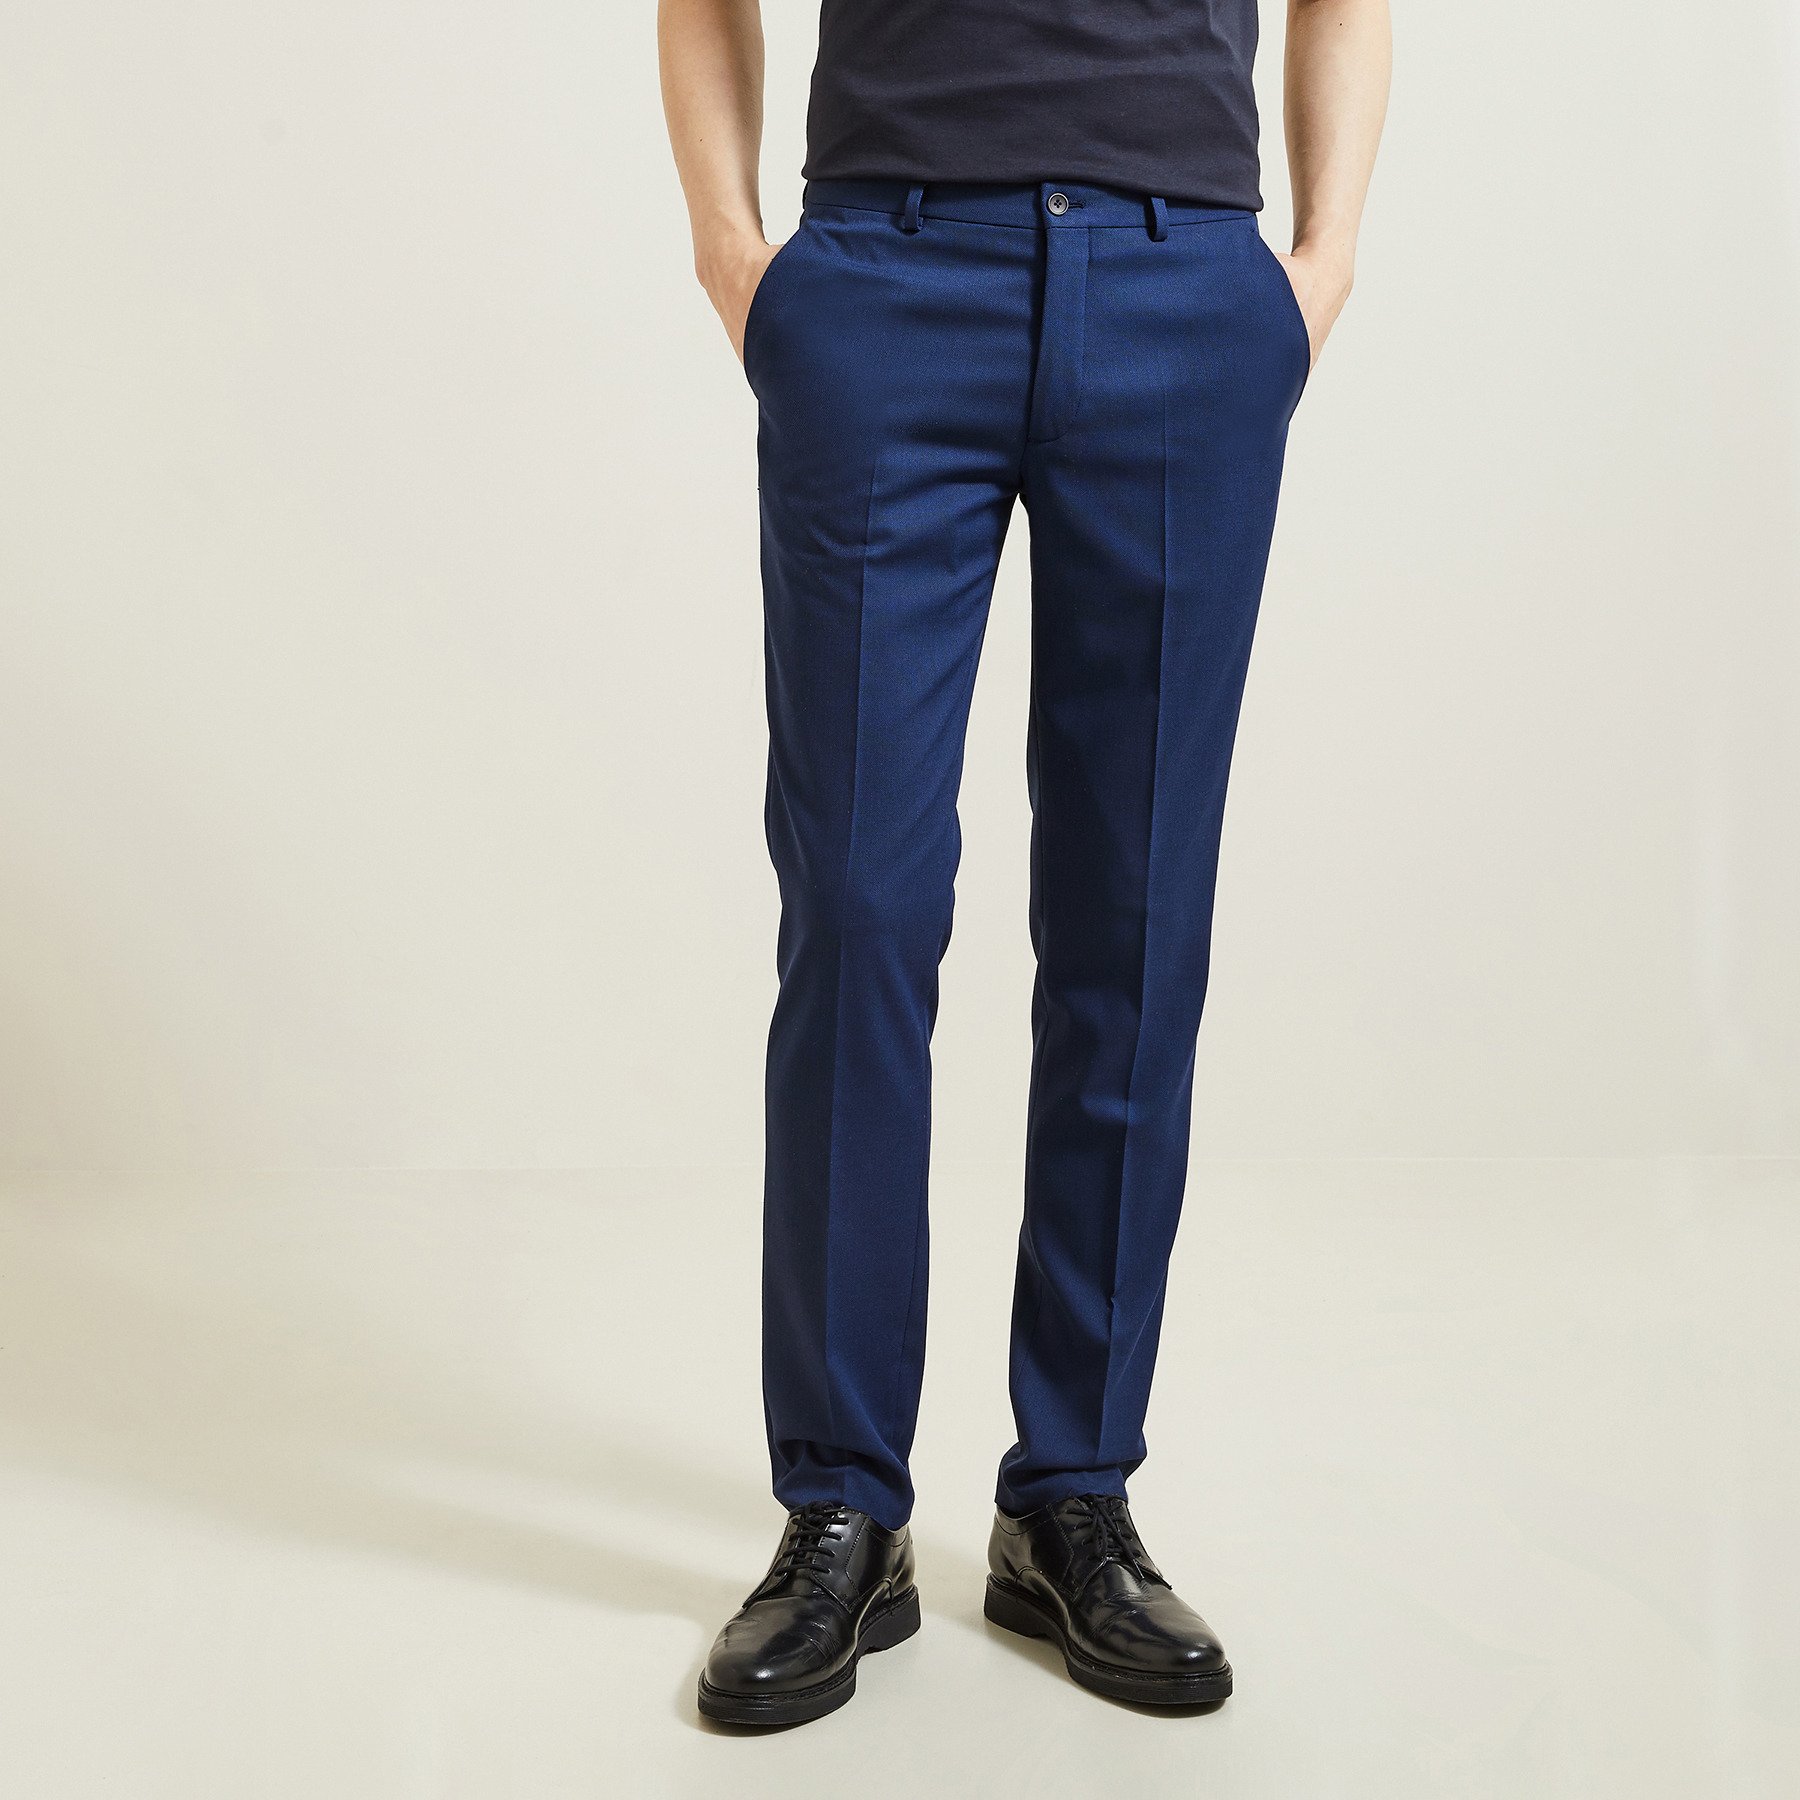 Pantalon de costume slim bi-ton Bleu 36 72% Polyester, 27% Laine, 1% Elasthanne Homme